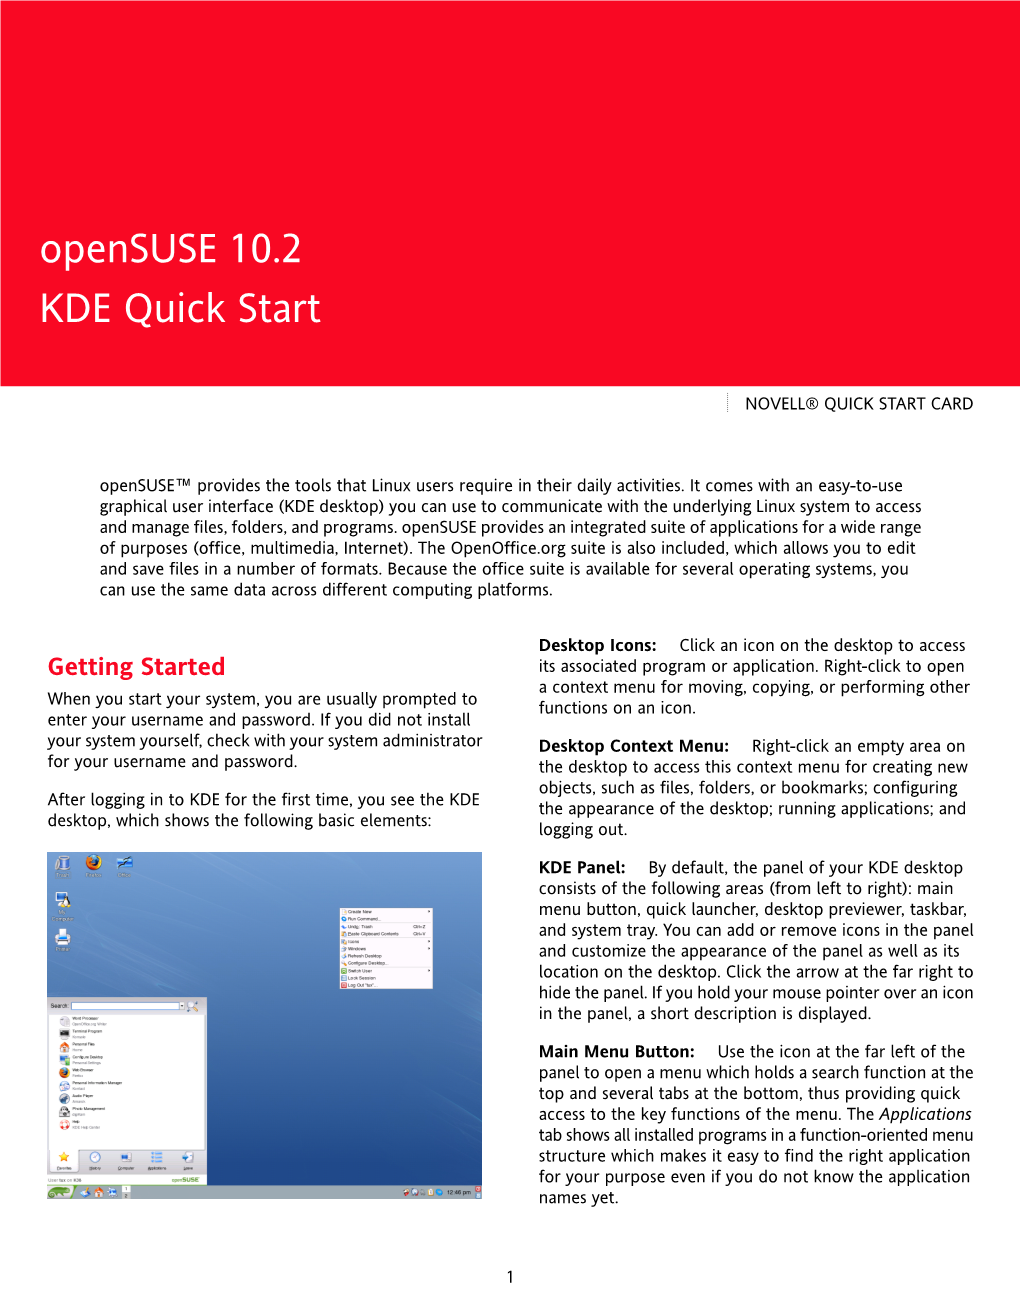 Opensuse 10.2 KDE Quick Start